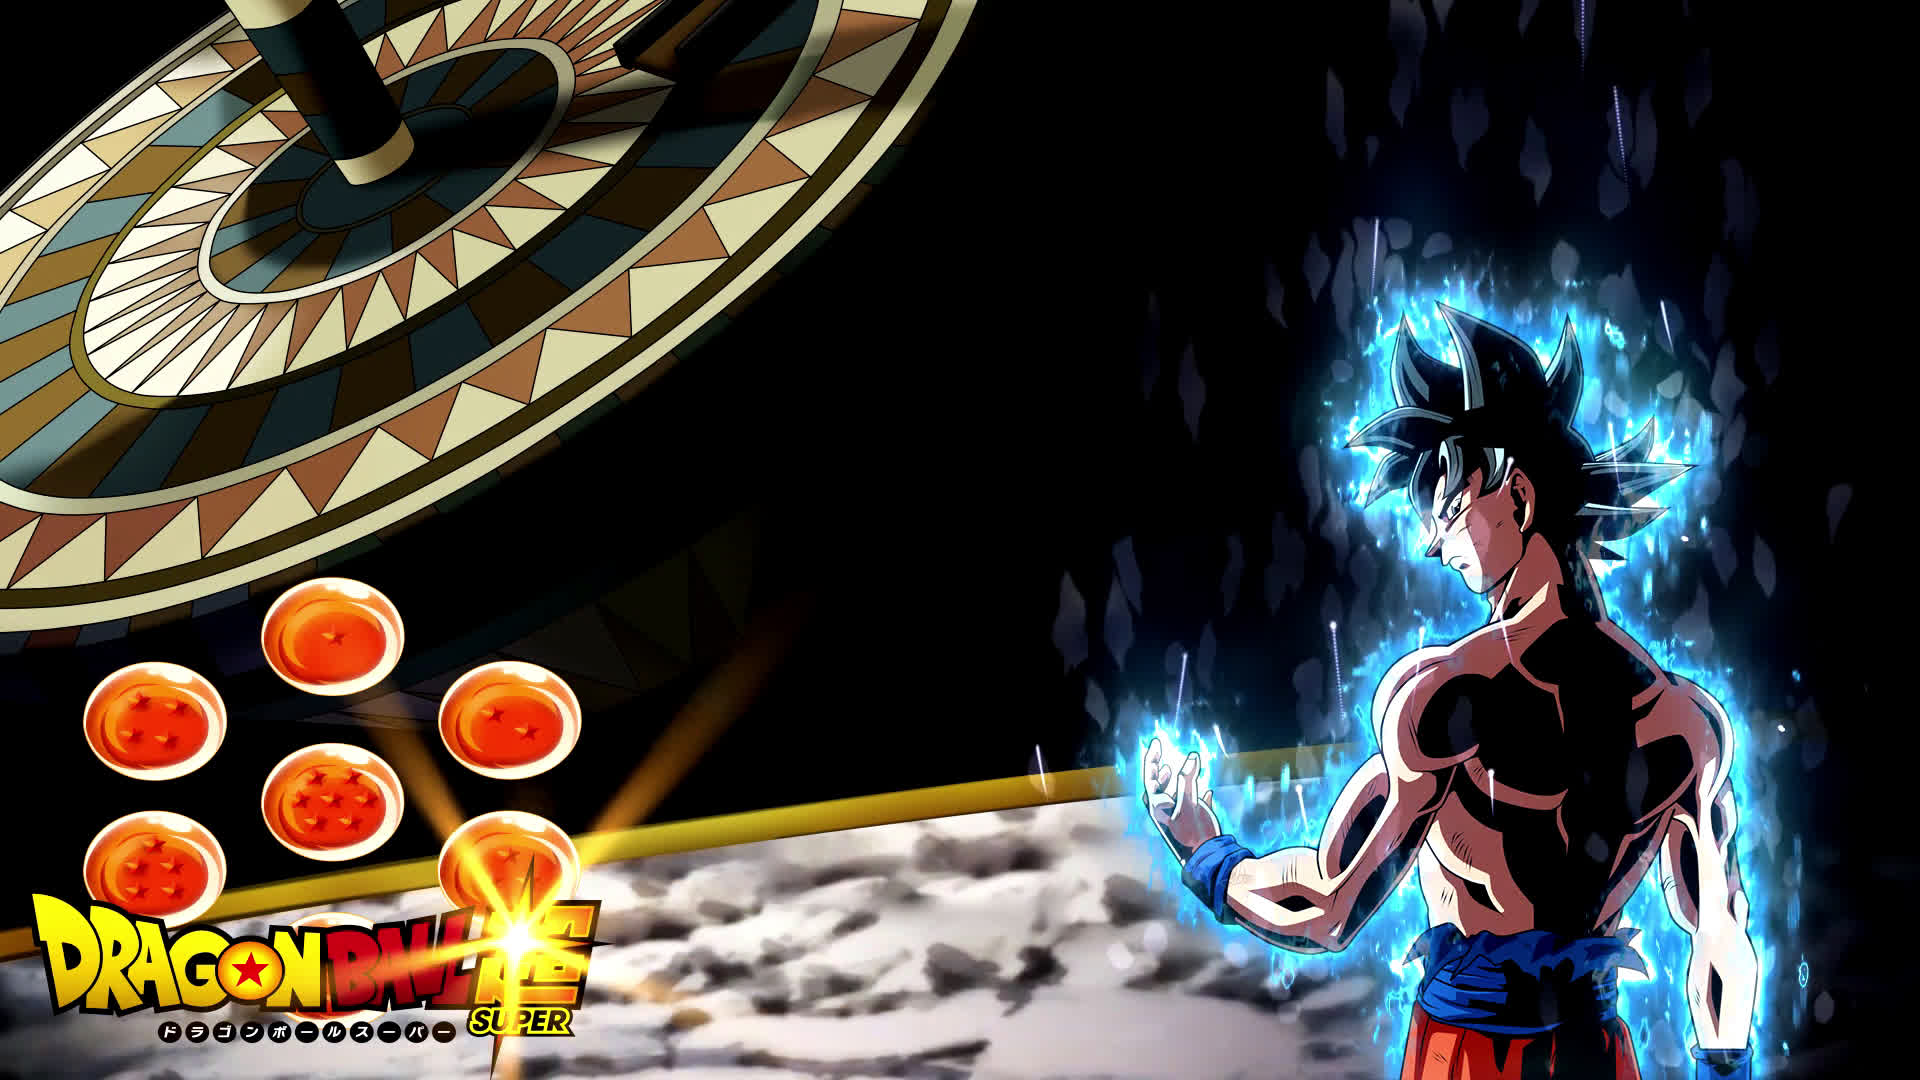 Goku - Dragon Ball Super - Free Live Wallpaper - Live Desktop Wallpapers